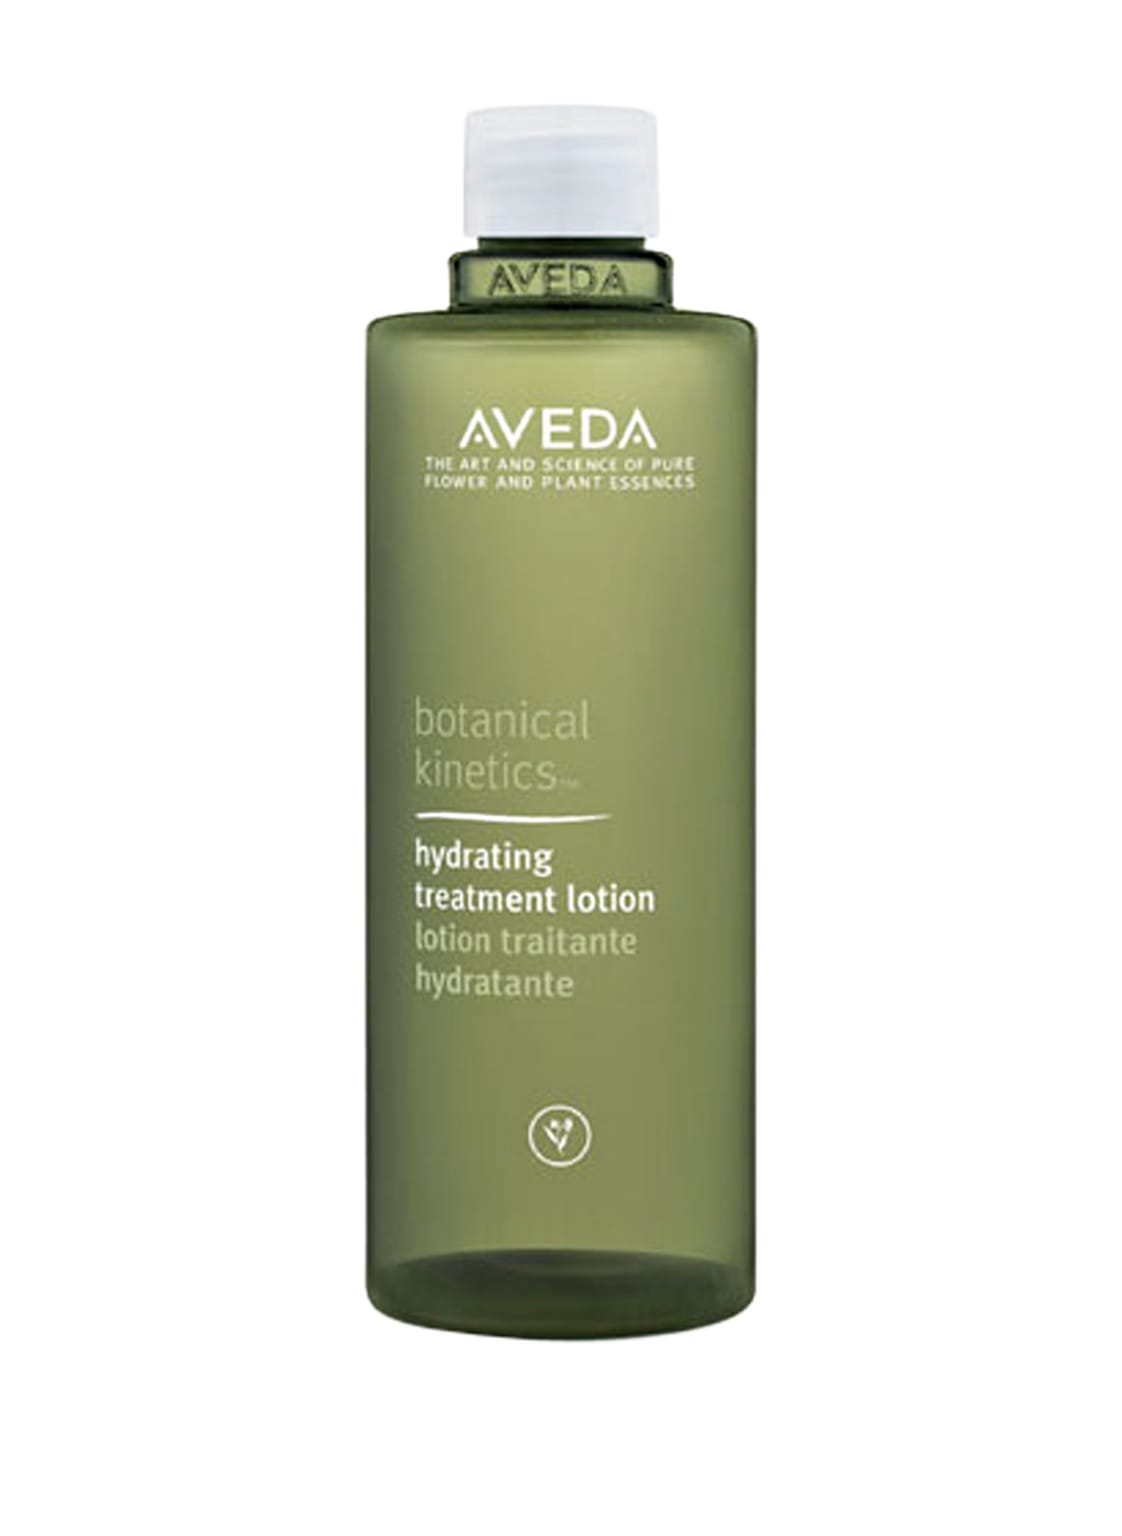 Aveda Botanical Kinetics Hydrating Treatment Lotion 150 ml von AVEDA